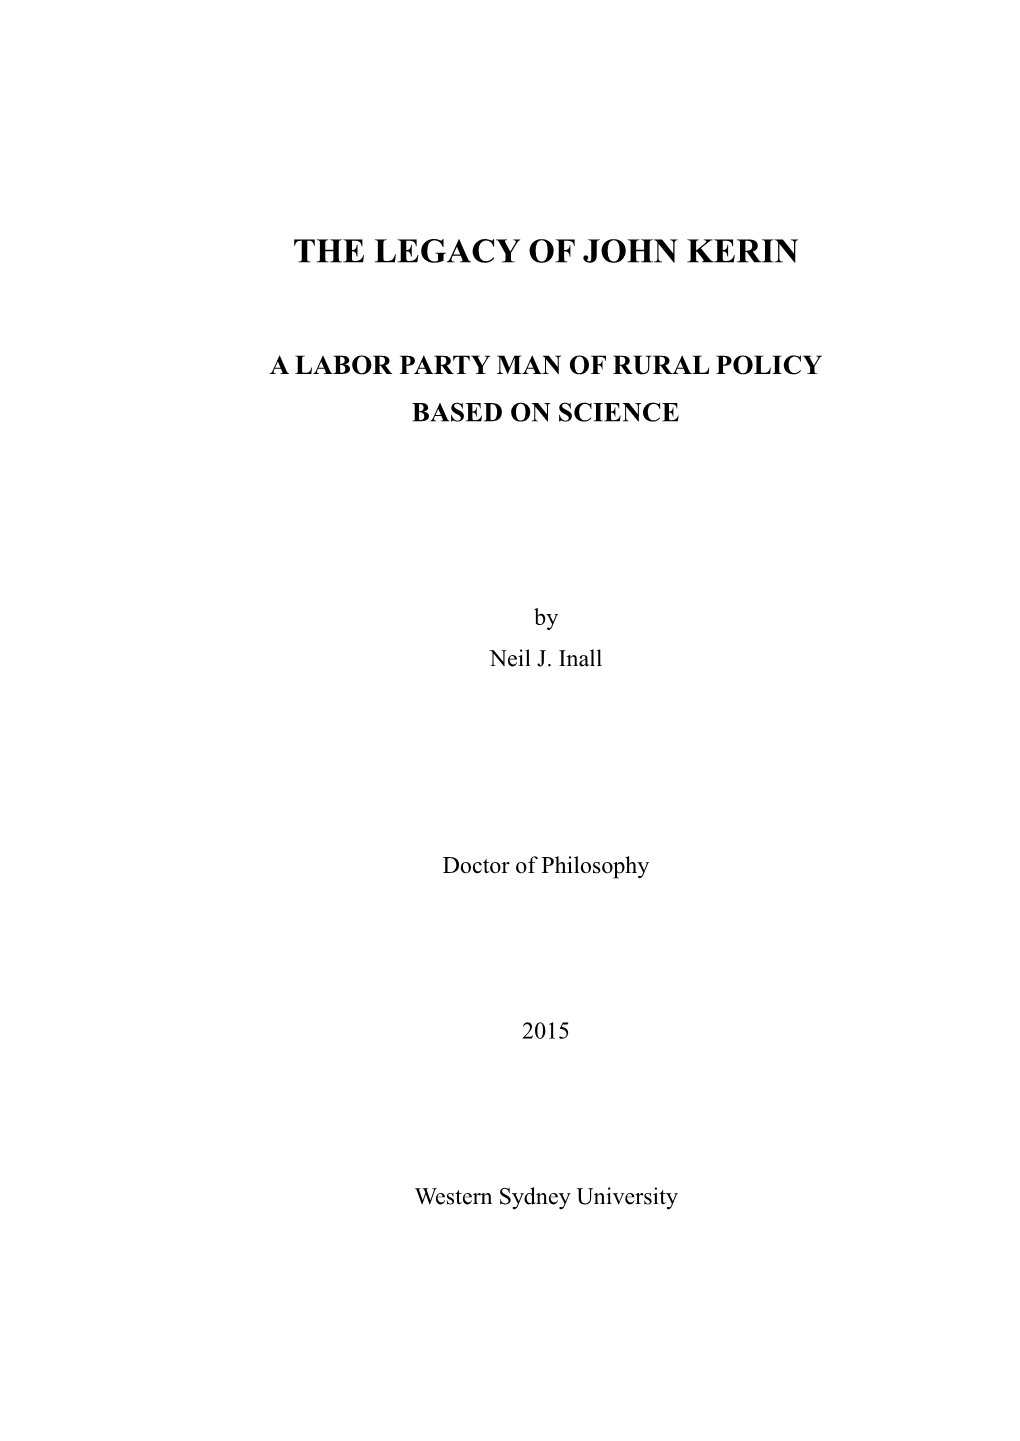 The Legacy of John Kerin